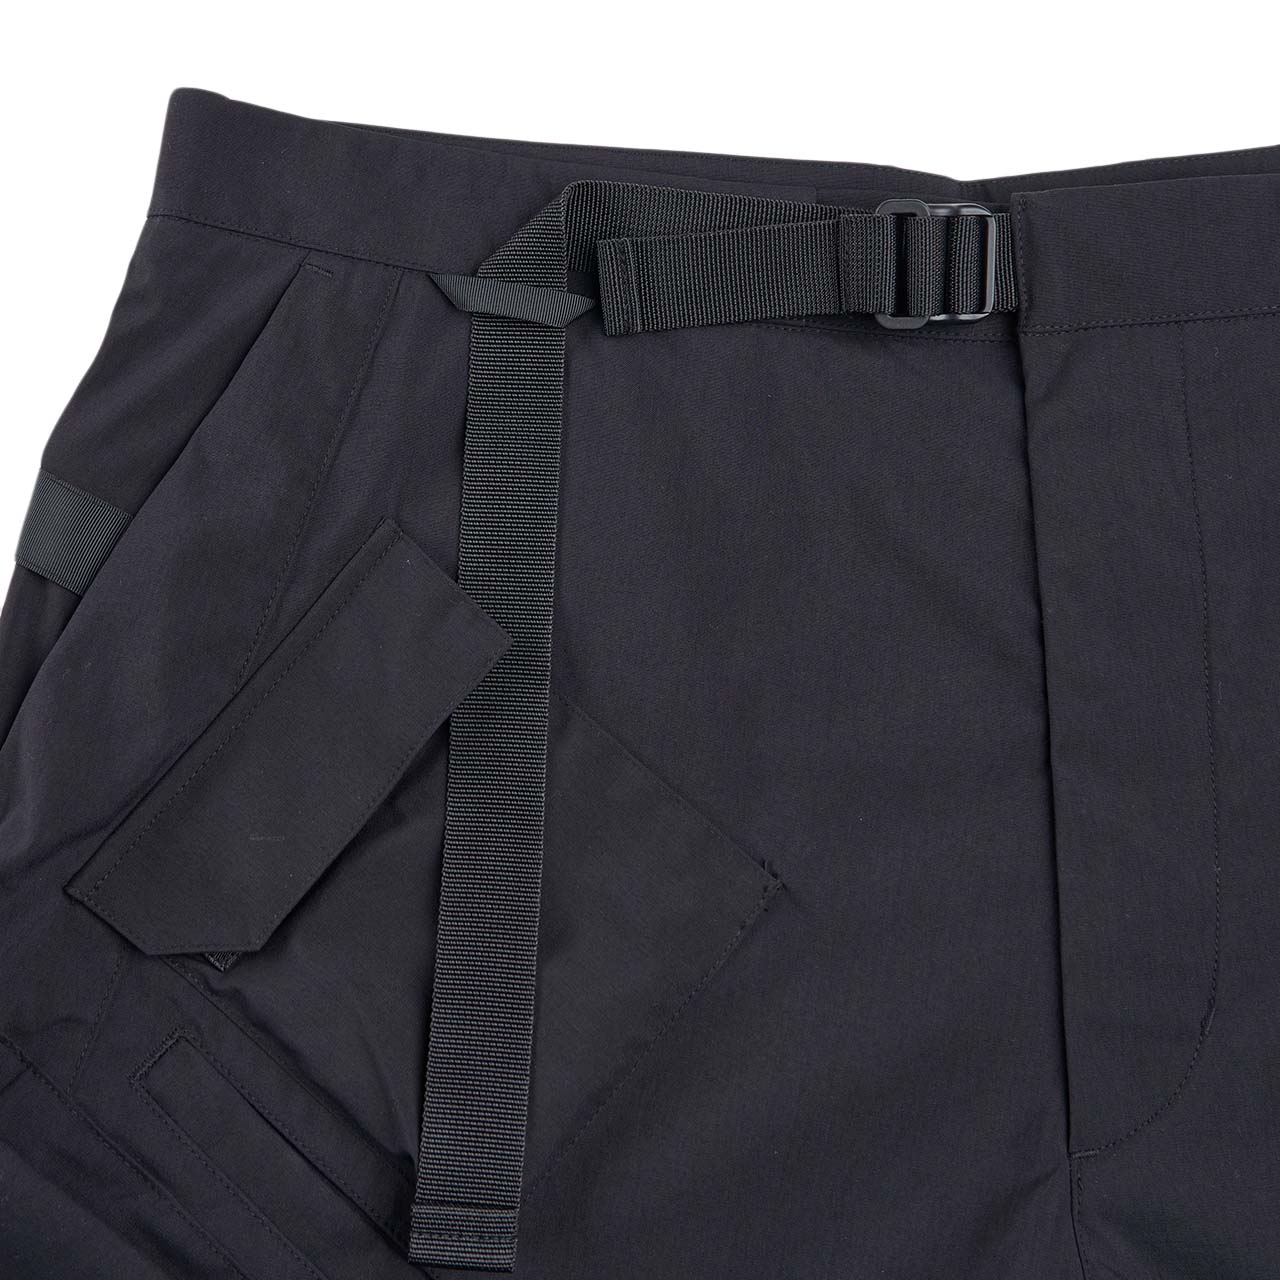 acronym sp29-m nylon stretch bdu short pant (black) - a.plus store